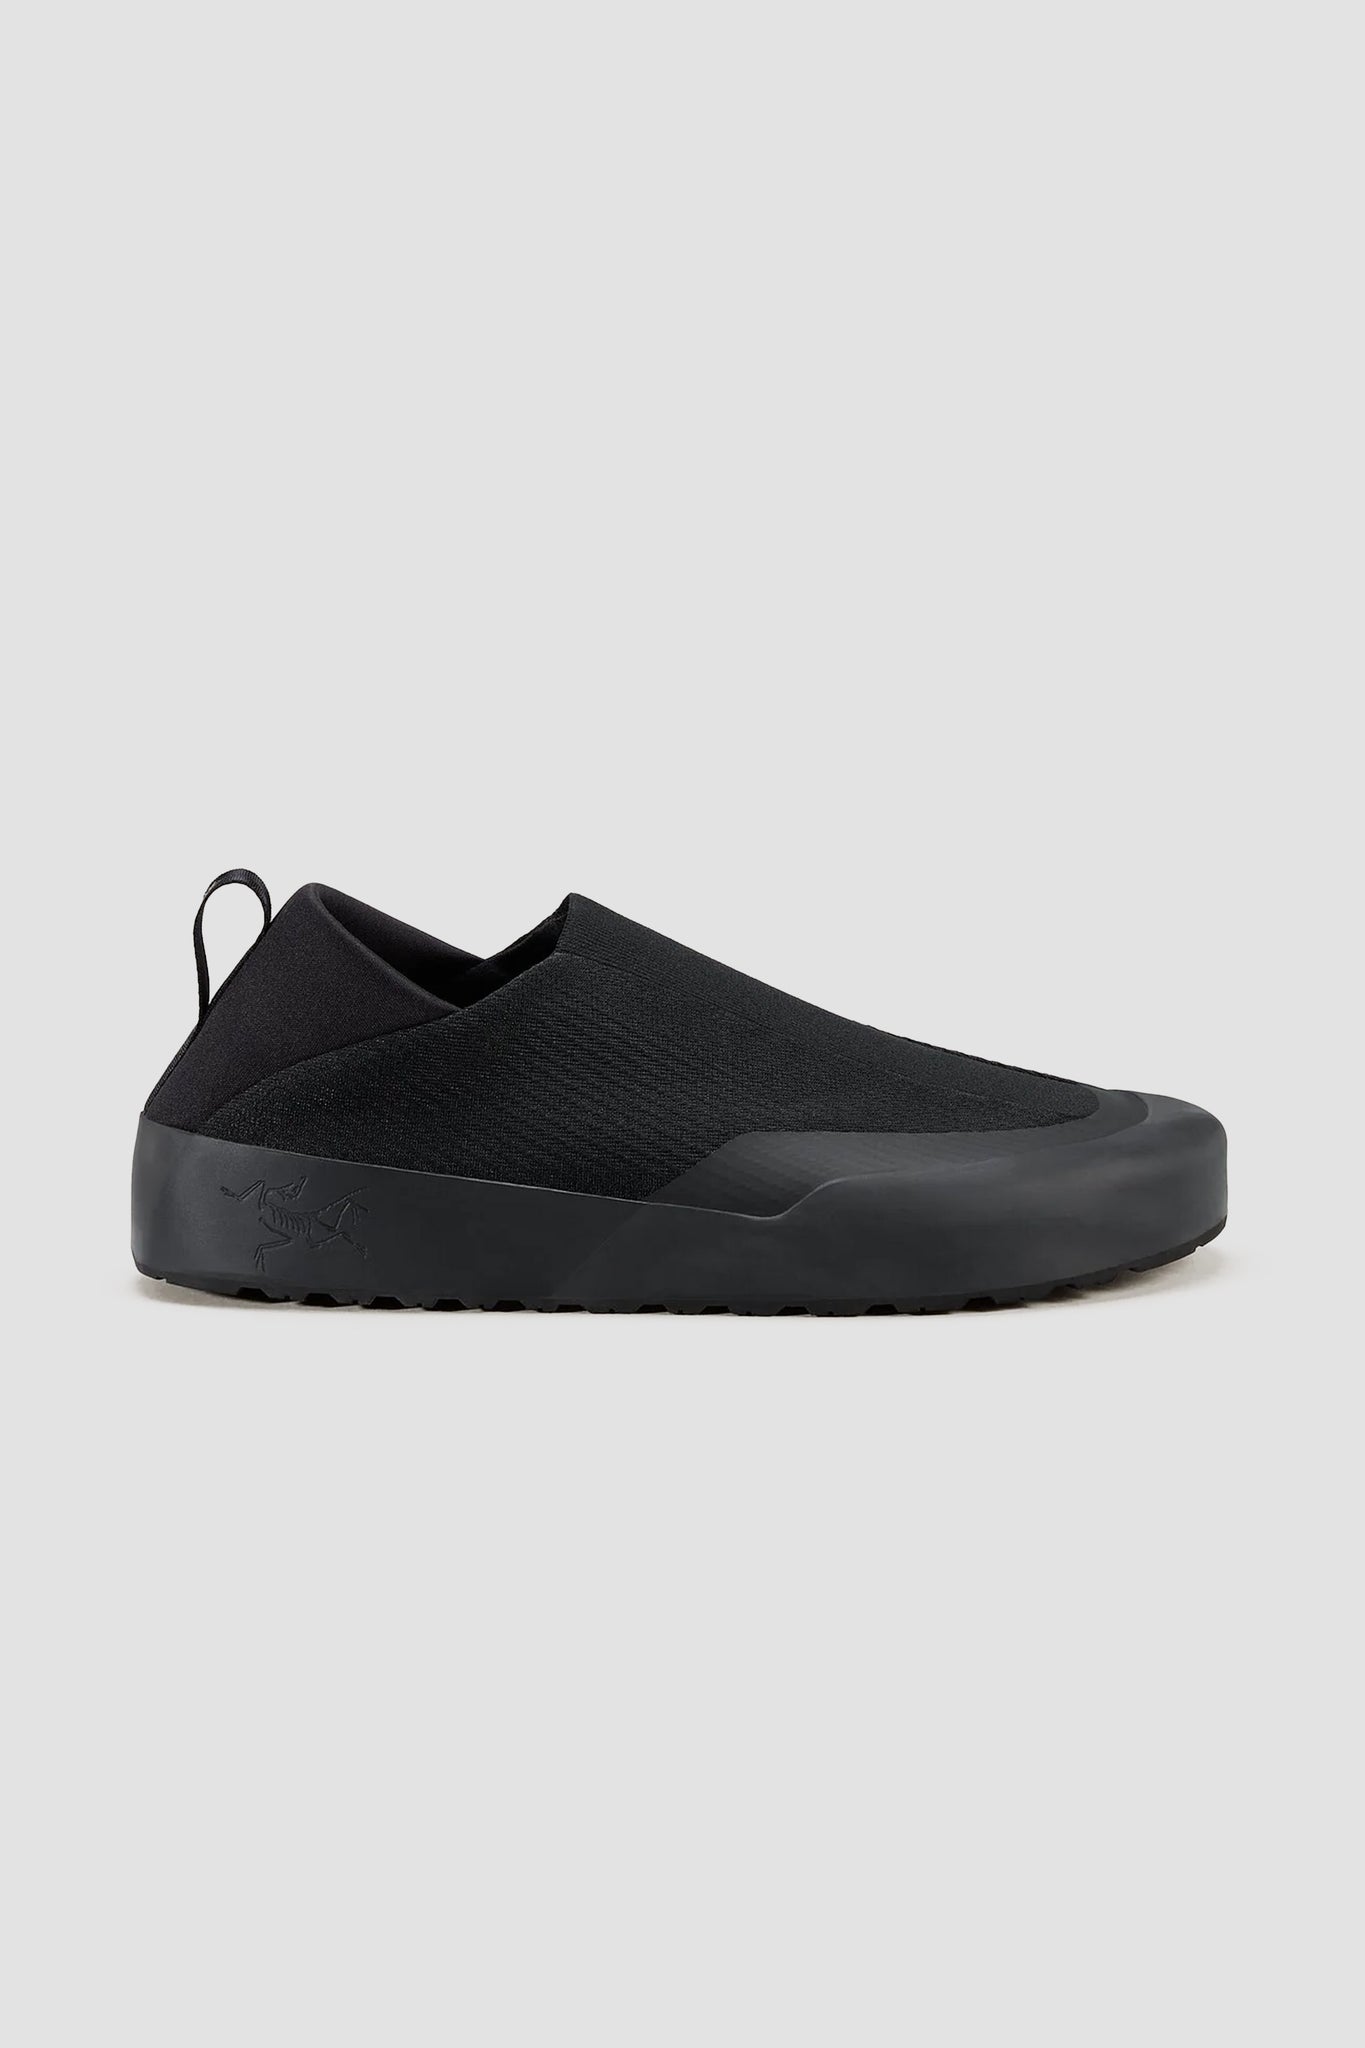 Arc'teryx Men's Kragg Shoe in Black/Black